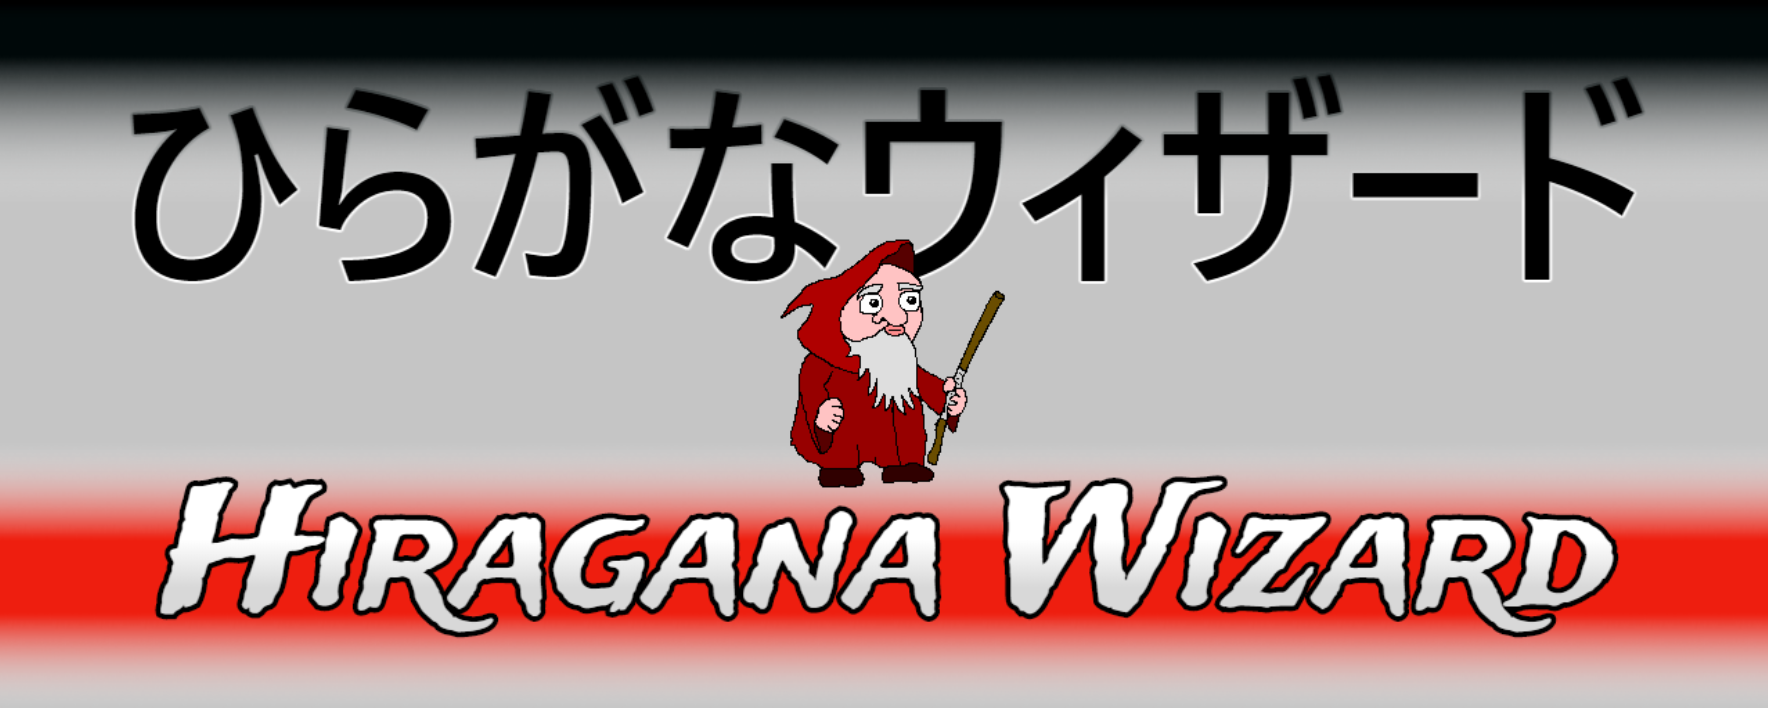 Hiragana Wizard